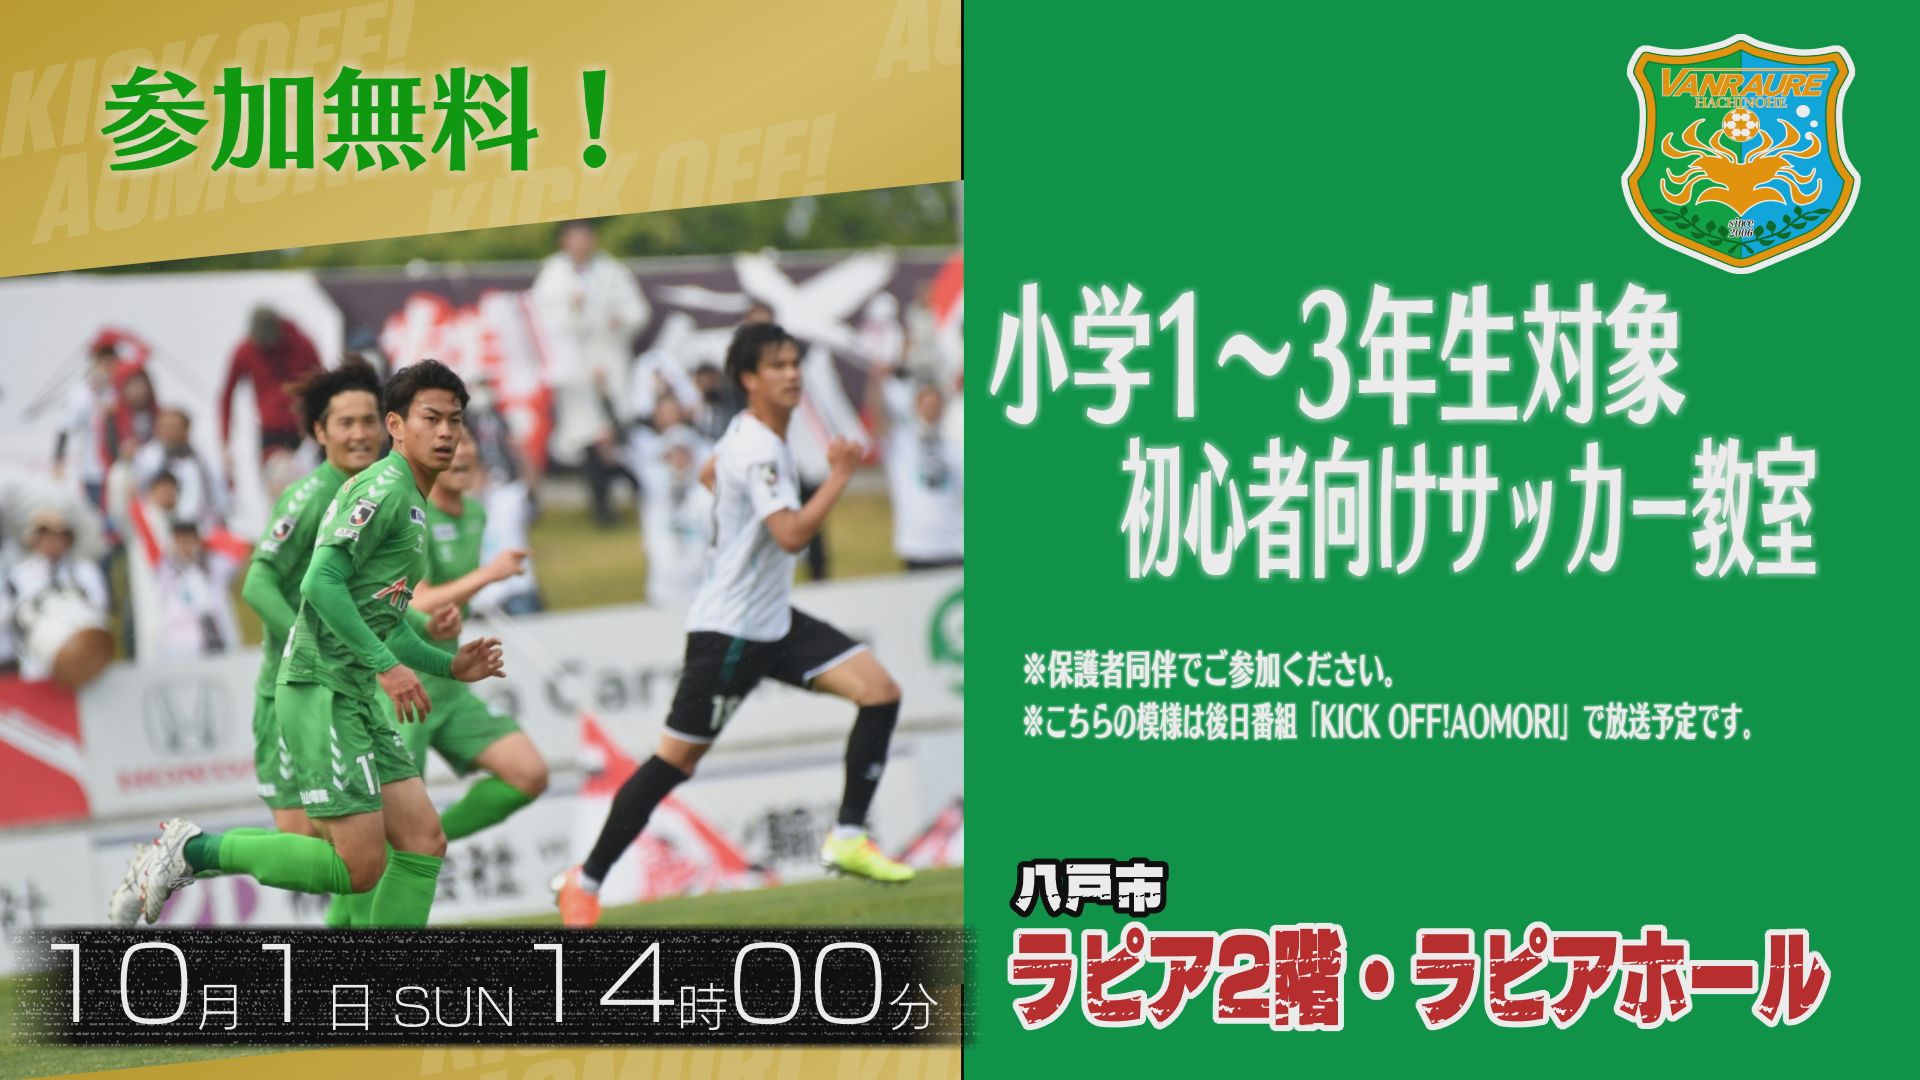 KICK OFF！AOMORI presents ヴァンラーレ八戸 キッズサッカー教室inラピア